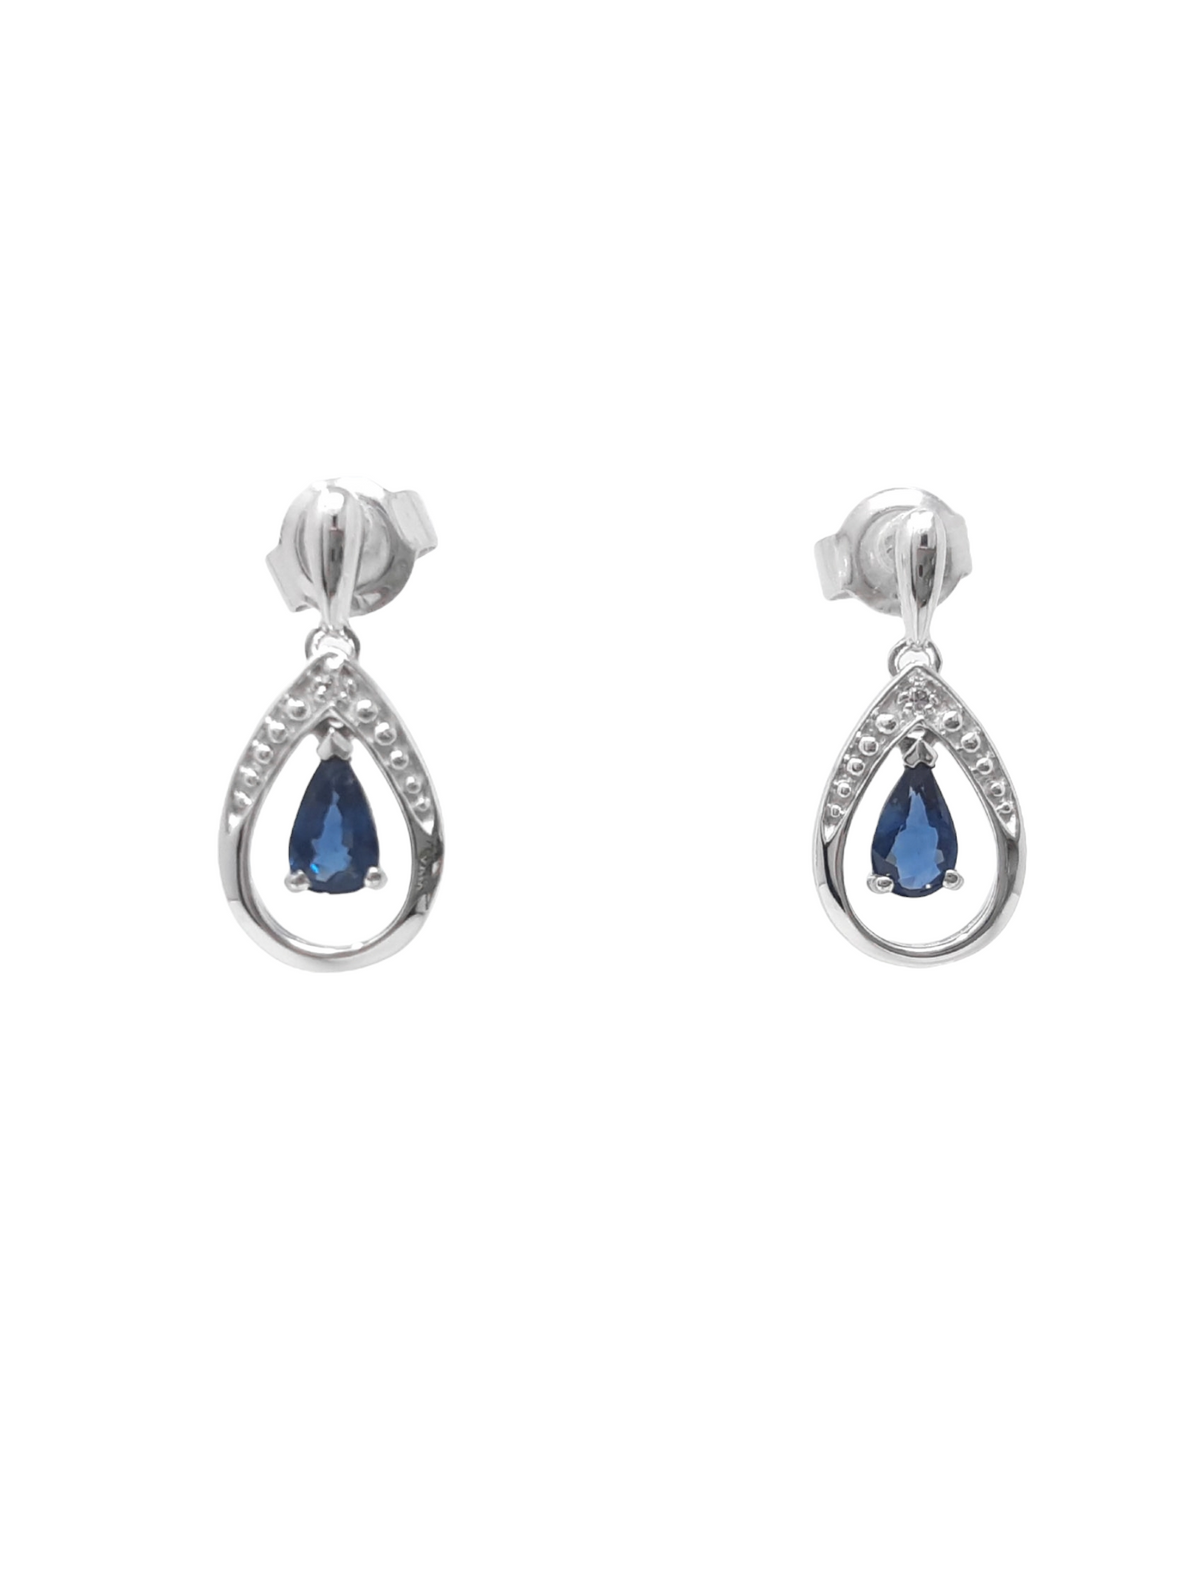 10K White Gold Sapphire and Diamond Earrings